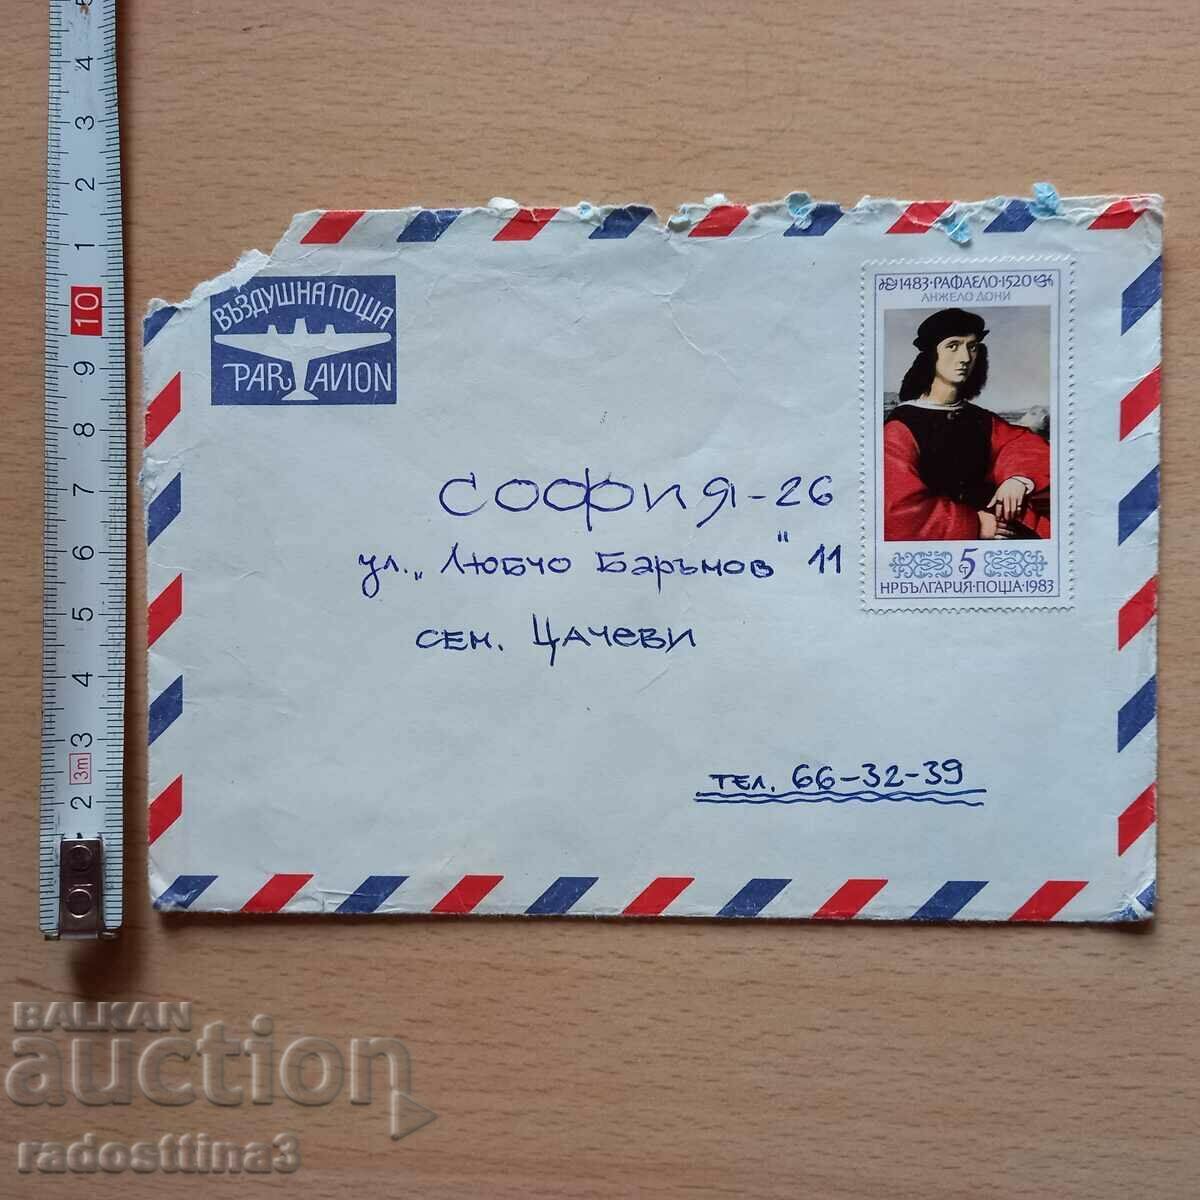 Postal envelope with Bulgaria brand